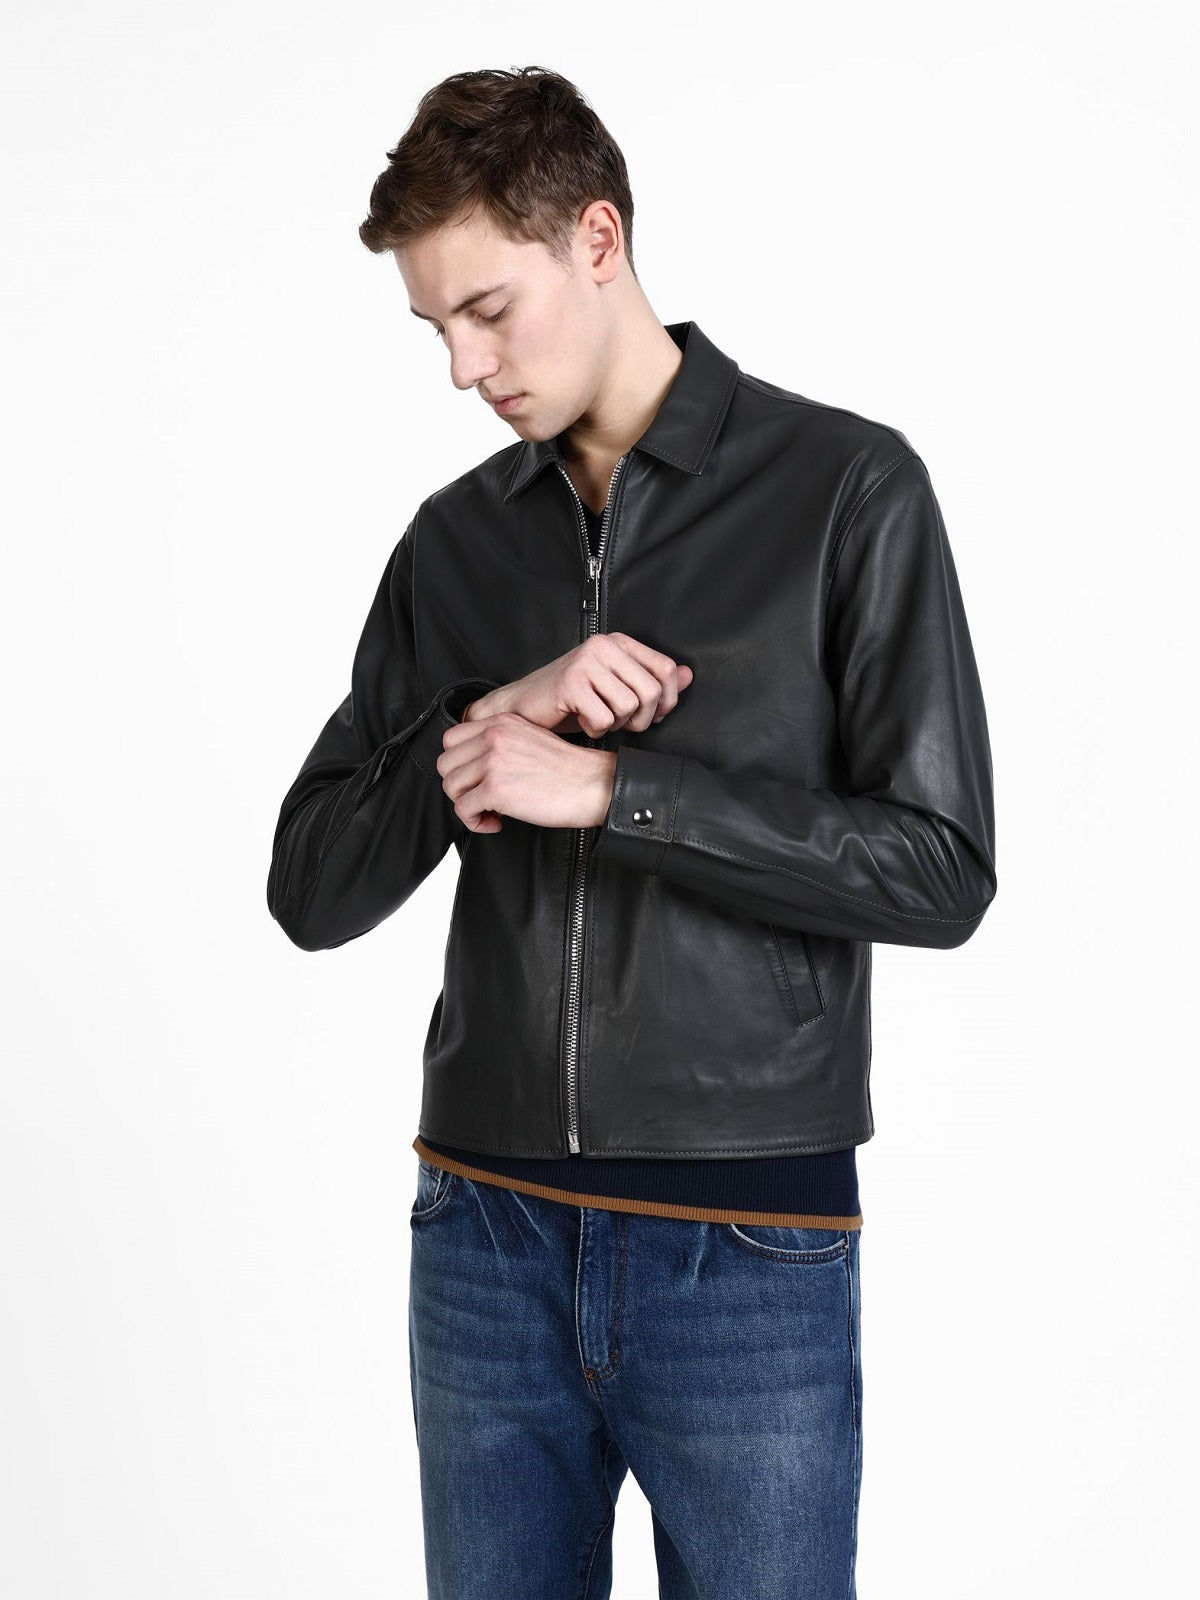 Men Black Shirt Leather Jacket | Black Leather Jacket Mens